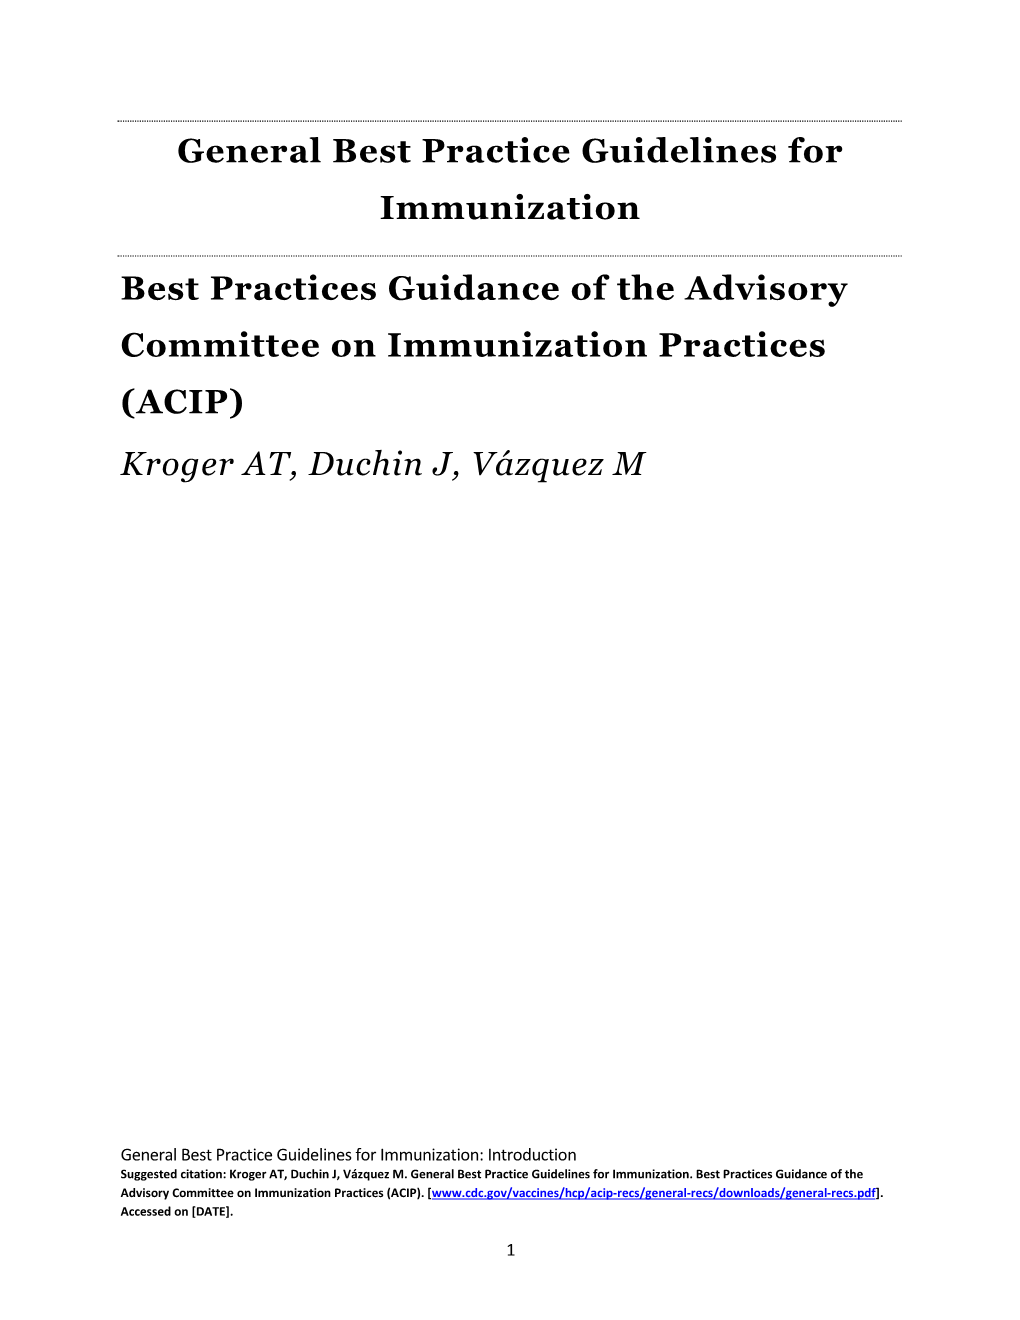 Advisory Committee on Immunization Practices (ACIP) General Best